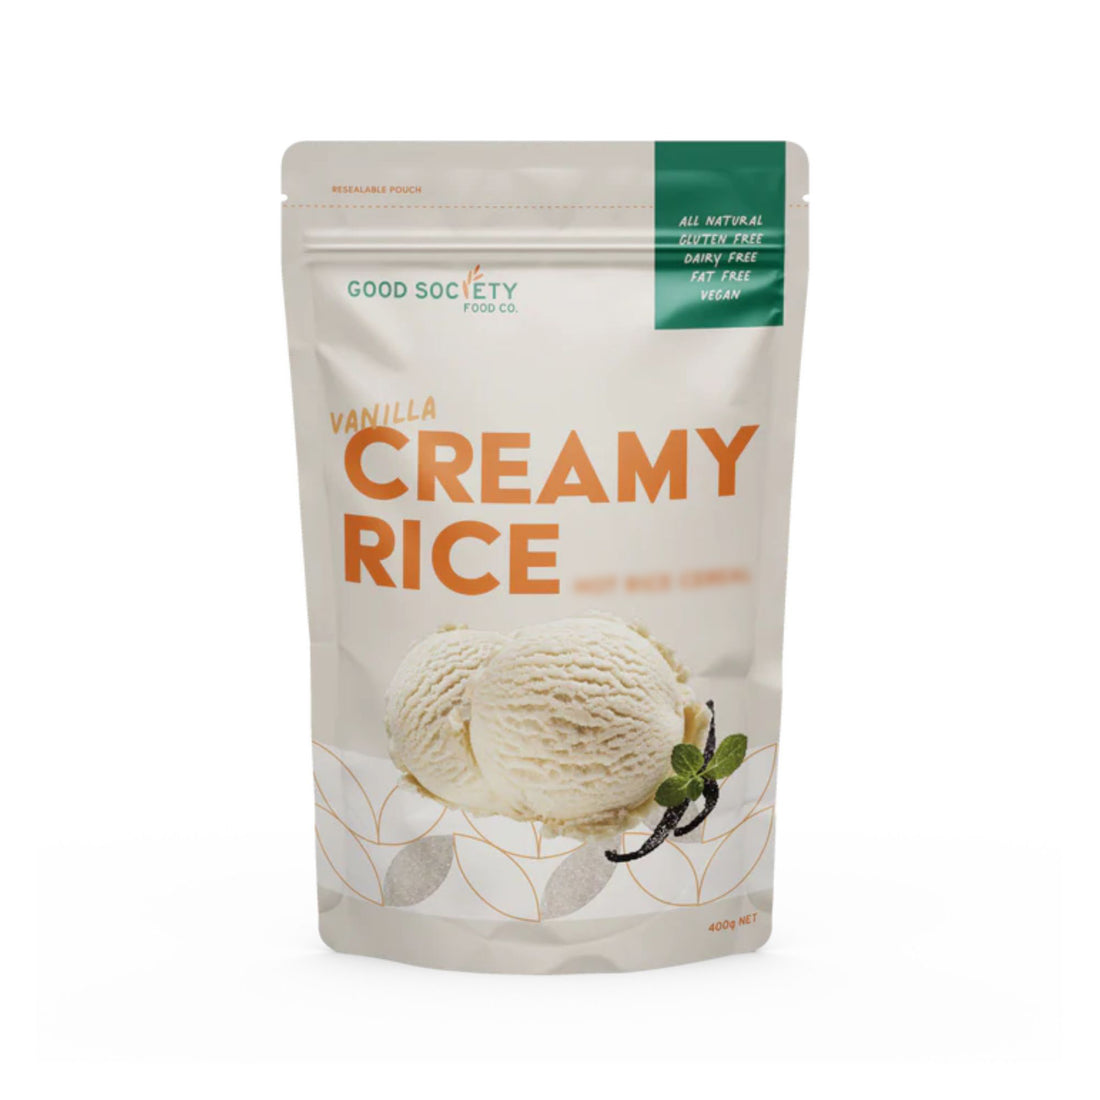 Good Price Creamy Rice